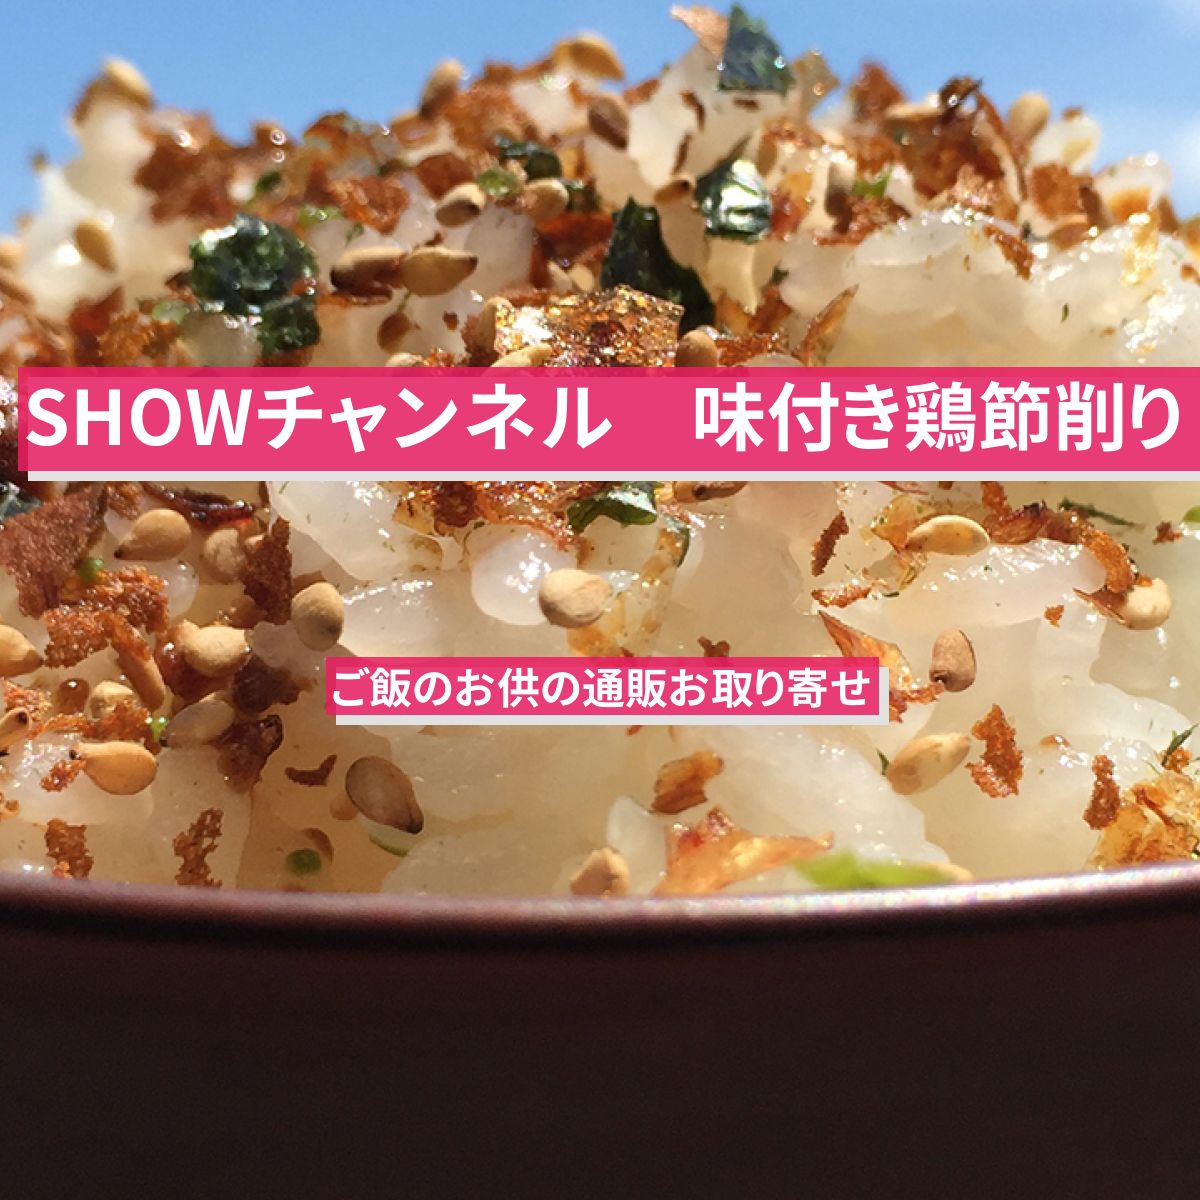 【SHOWチャンネル】アコメヤの鶏節を窪田正孝さんが試食『味付き鶏節削り』ご飯のお供の通販お取り寄せ